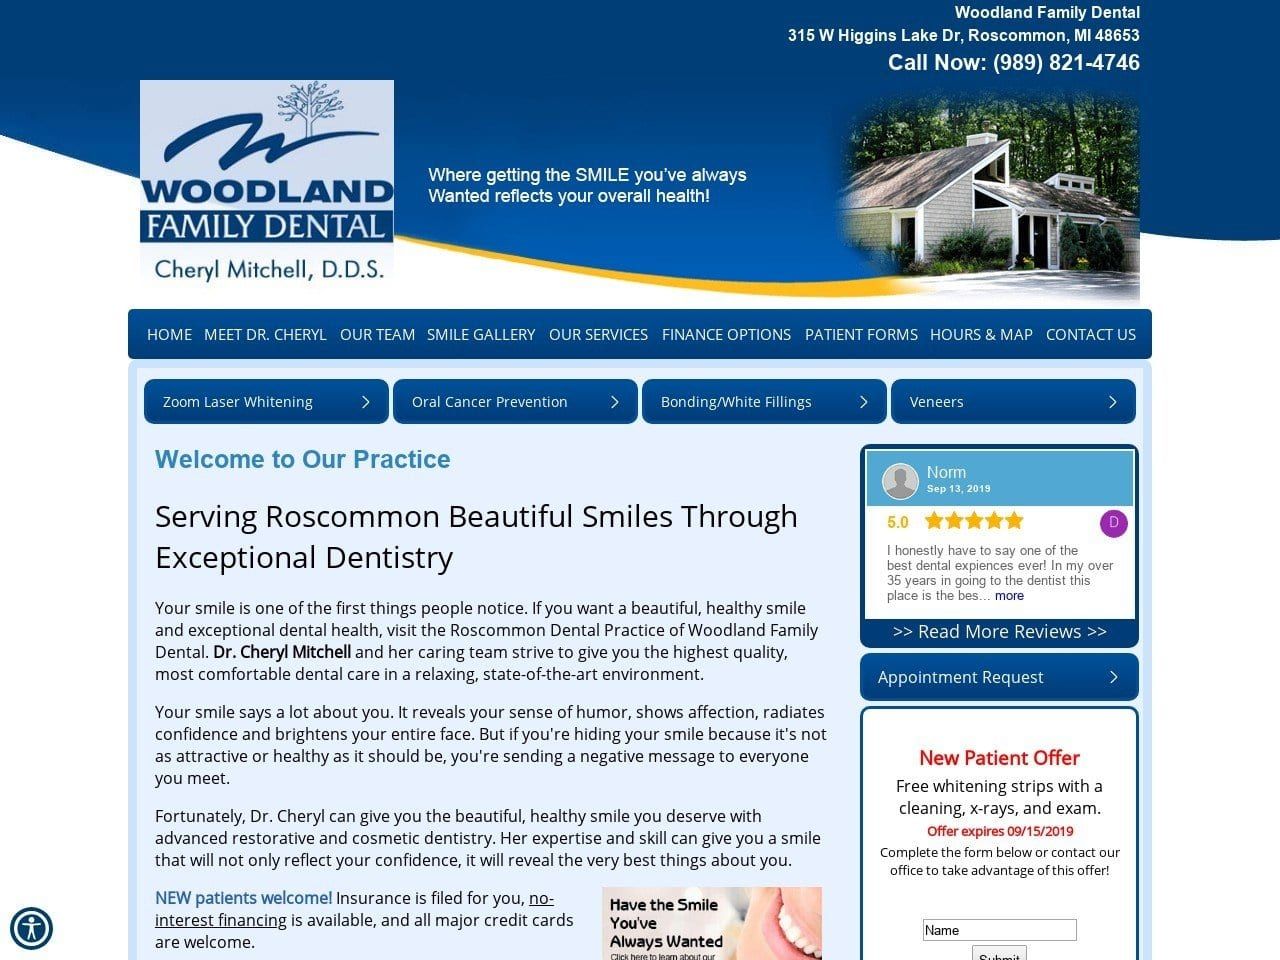 Woodland Family Dental Website Screenshot from woodlandfamilydental.com